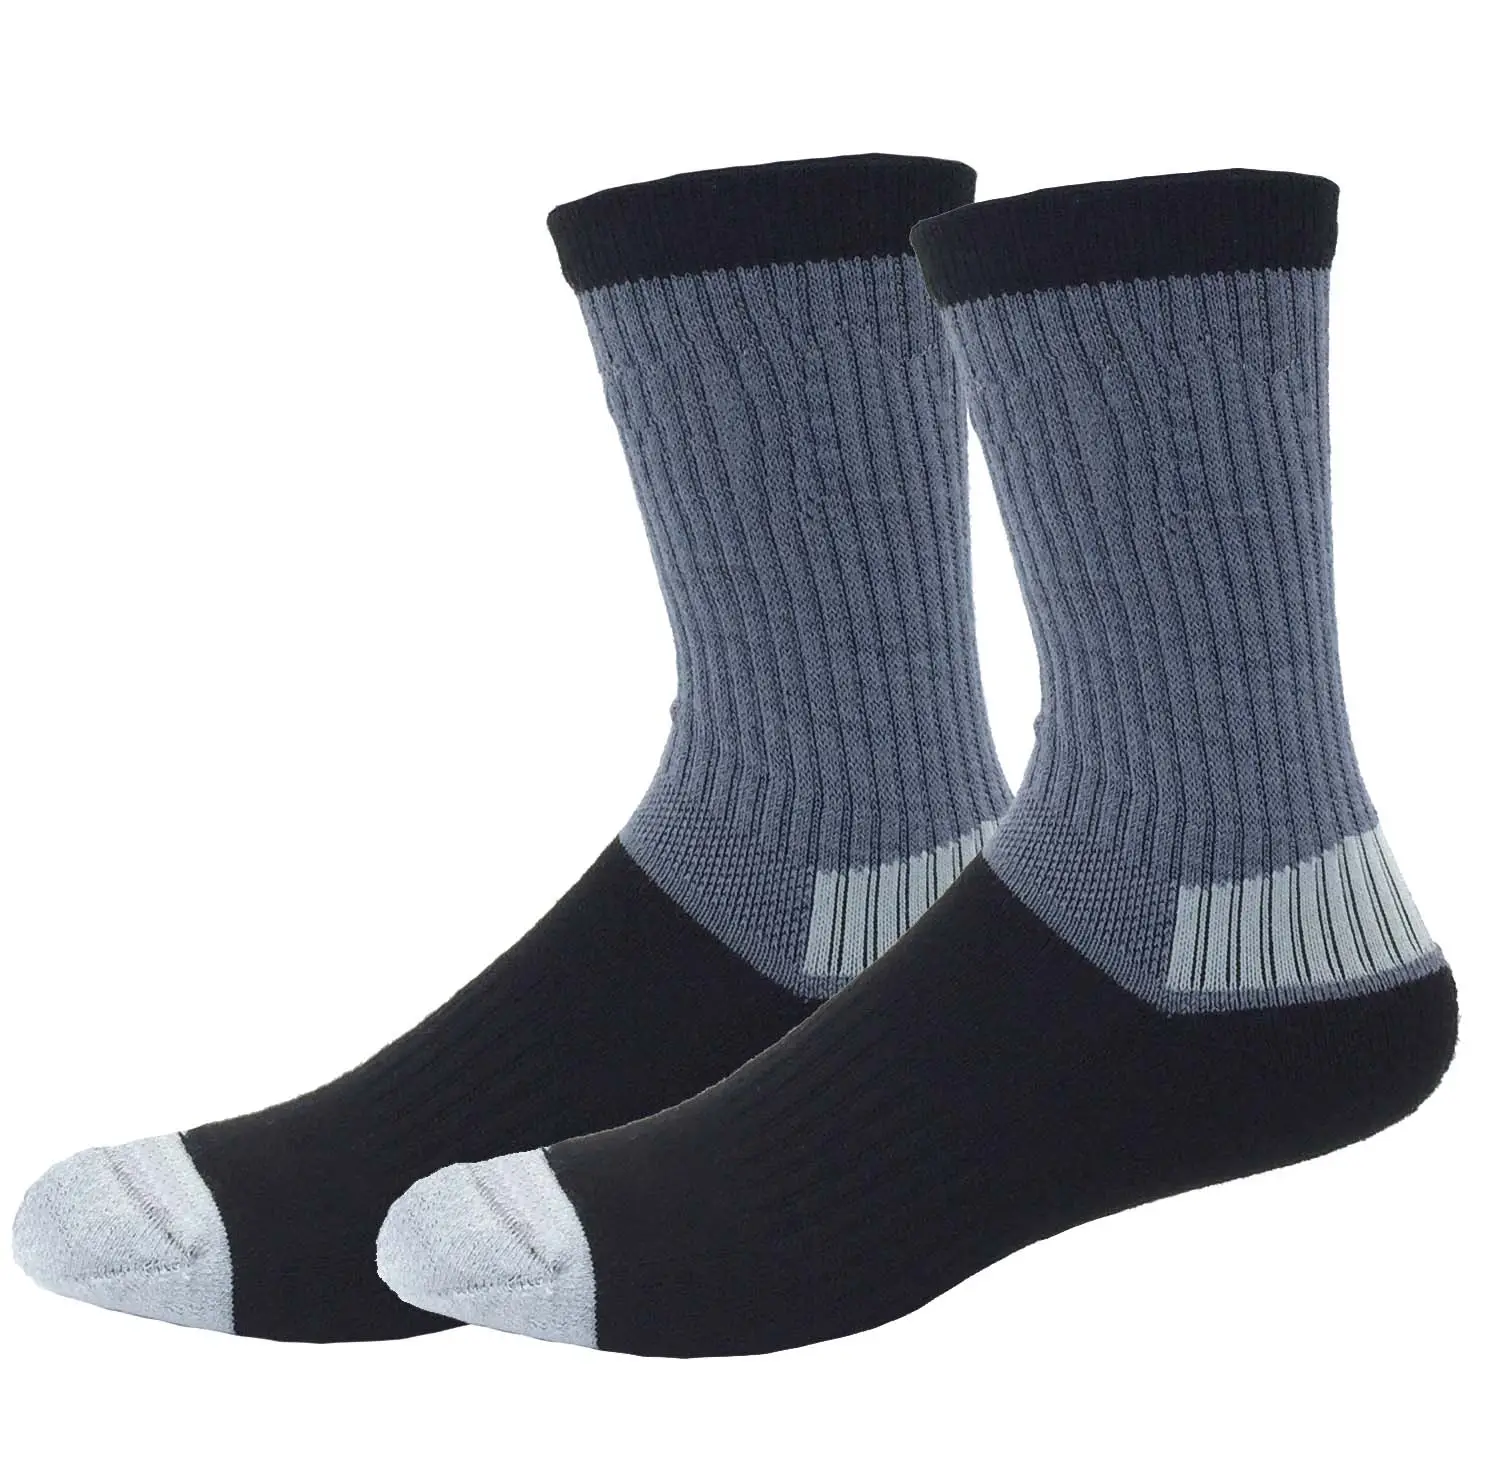 High quality Merino Wool hiking socks custom